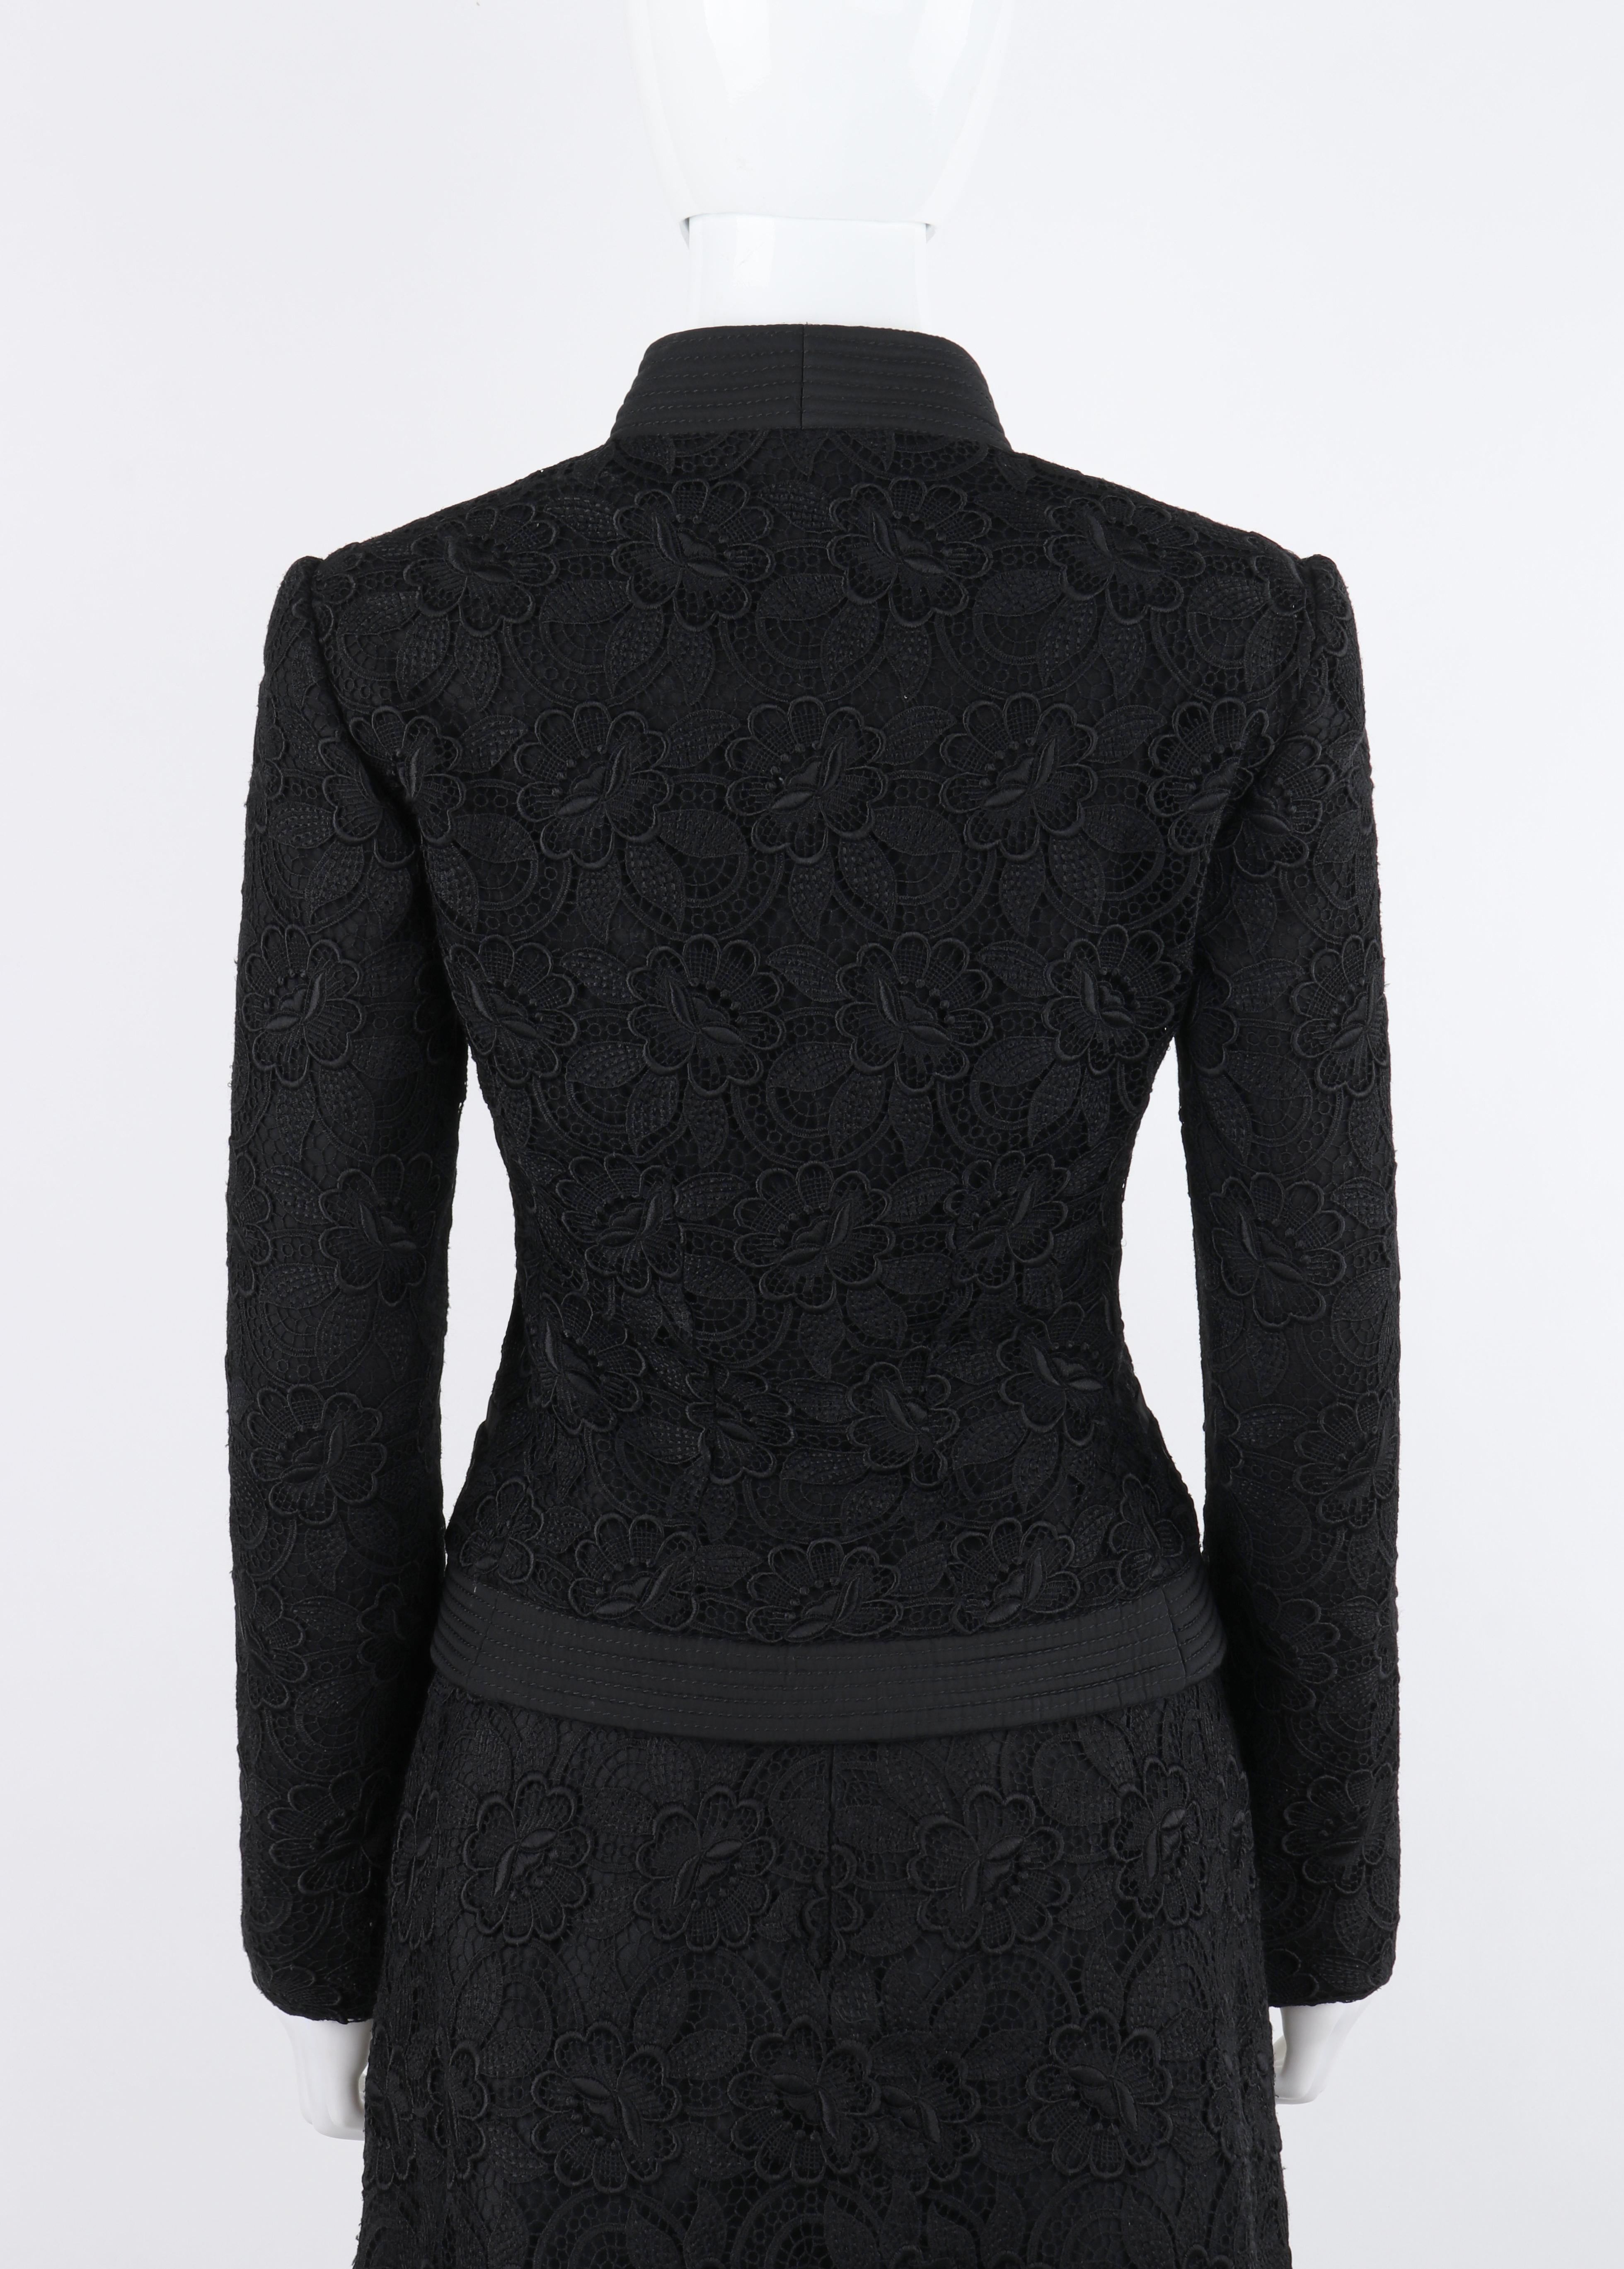 ALEXANDER McQUEEN Pre-Fall 2006 Black Two Piece Lace Jacket Skirt Suit Set For Sale 2